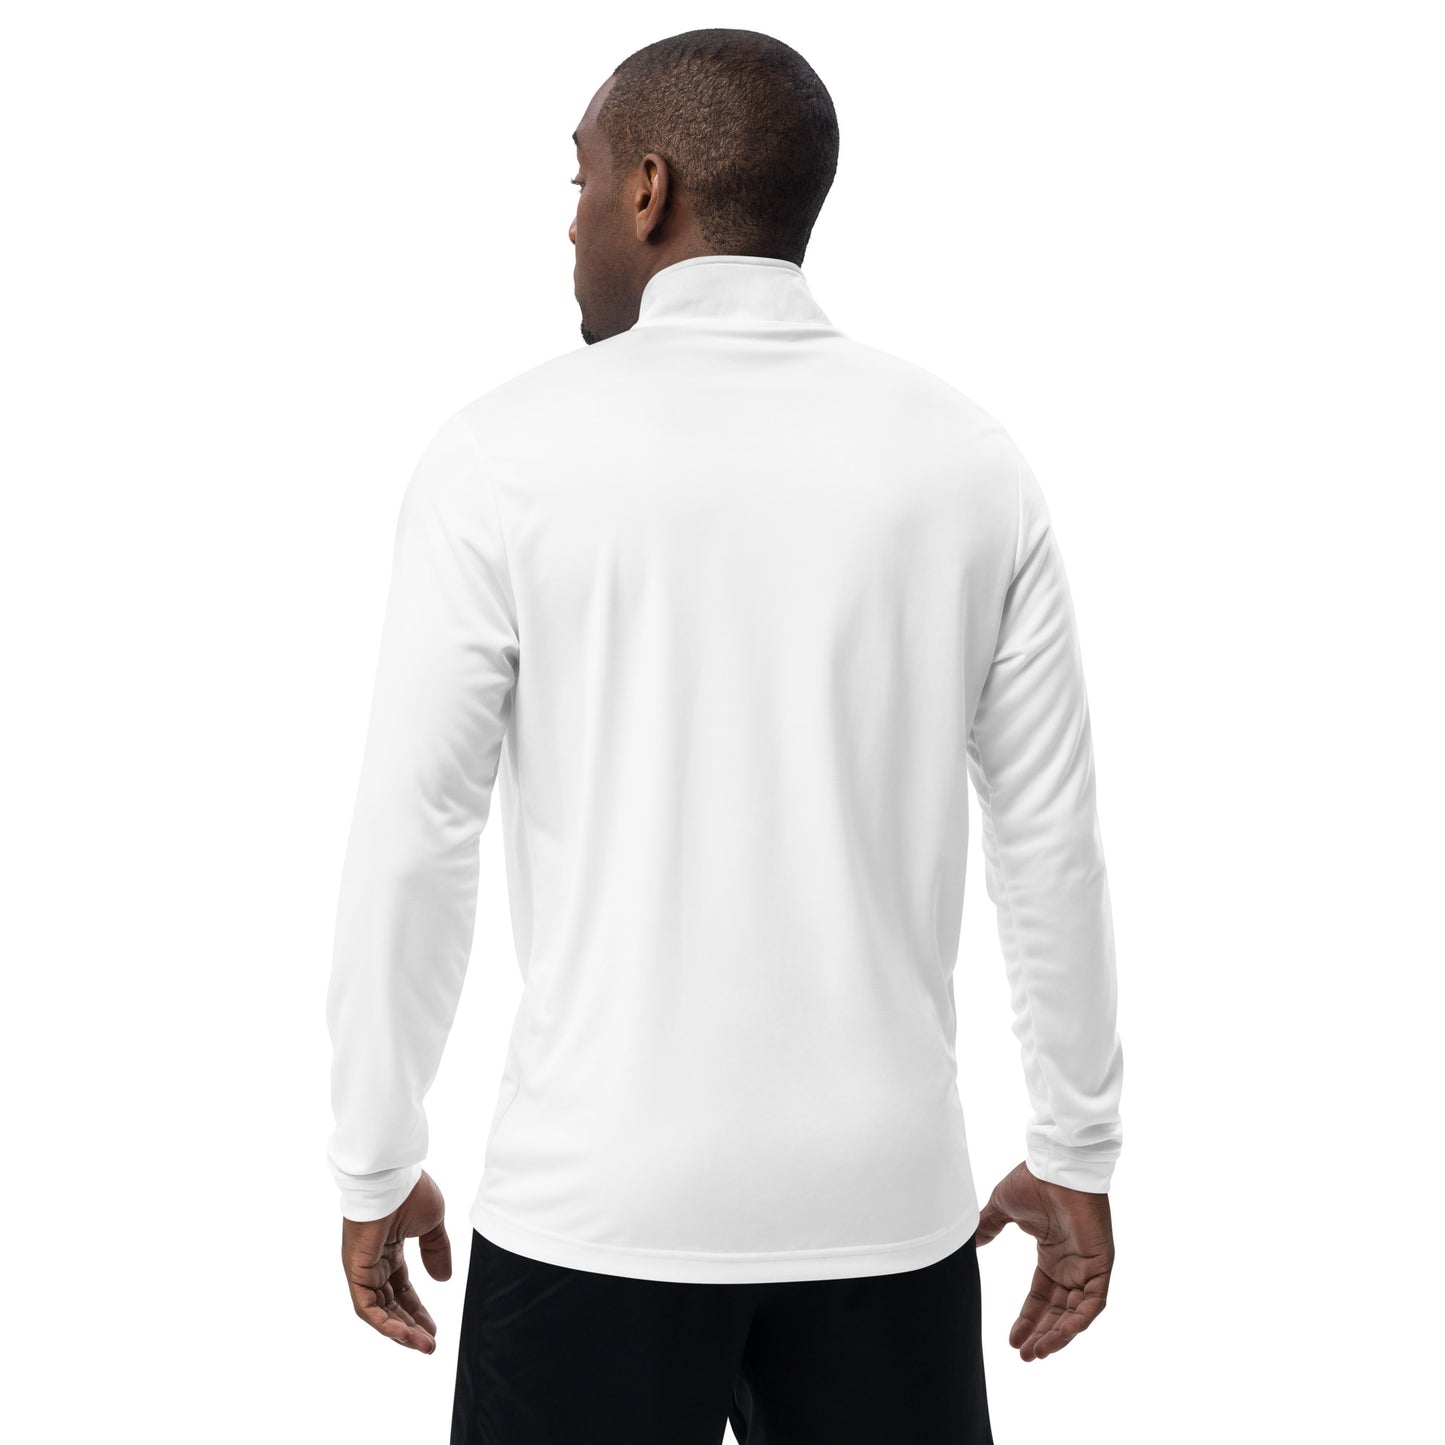 Adidas KBBNG White Quarter Zip Pullover